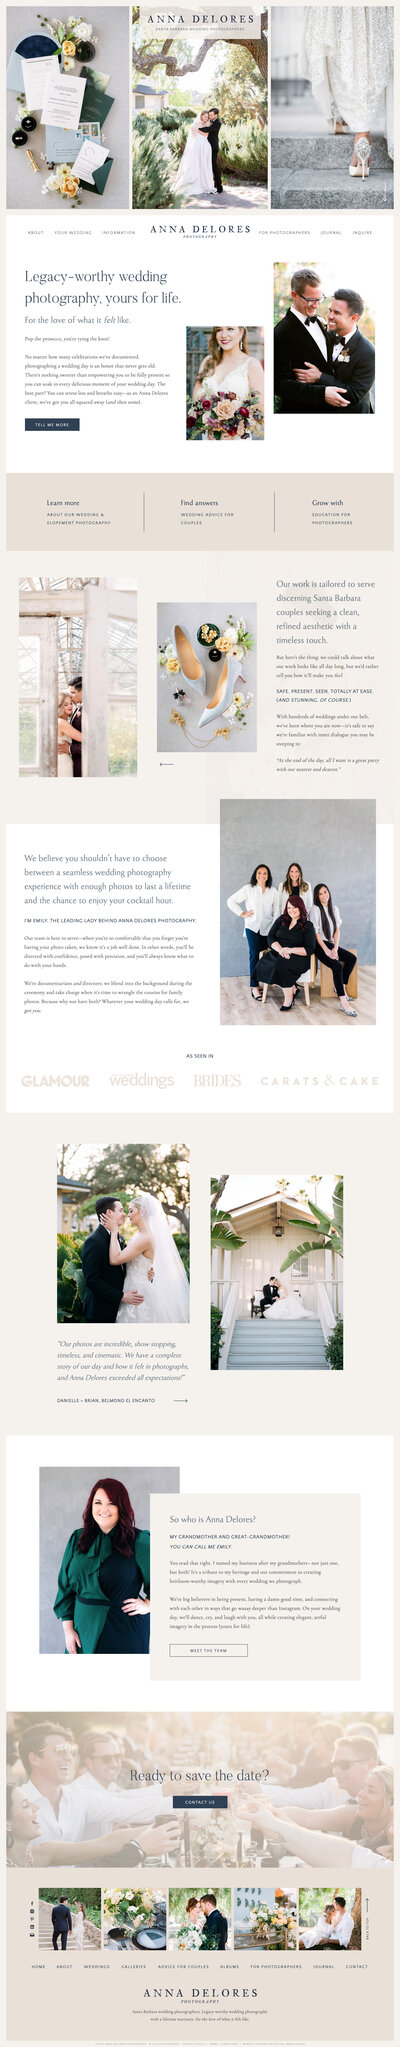 Custom Showit website for Anna Delores Photography, a Santa Barbara wedding photographer